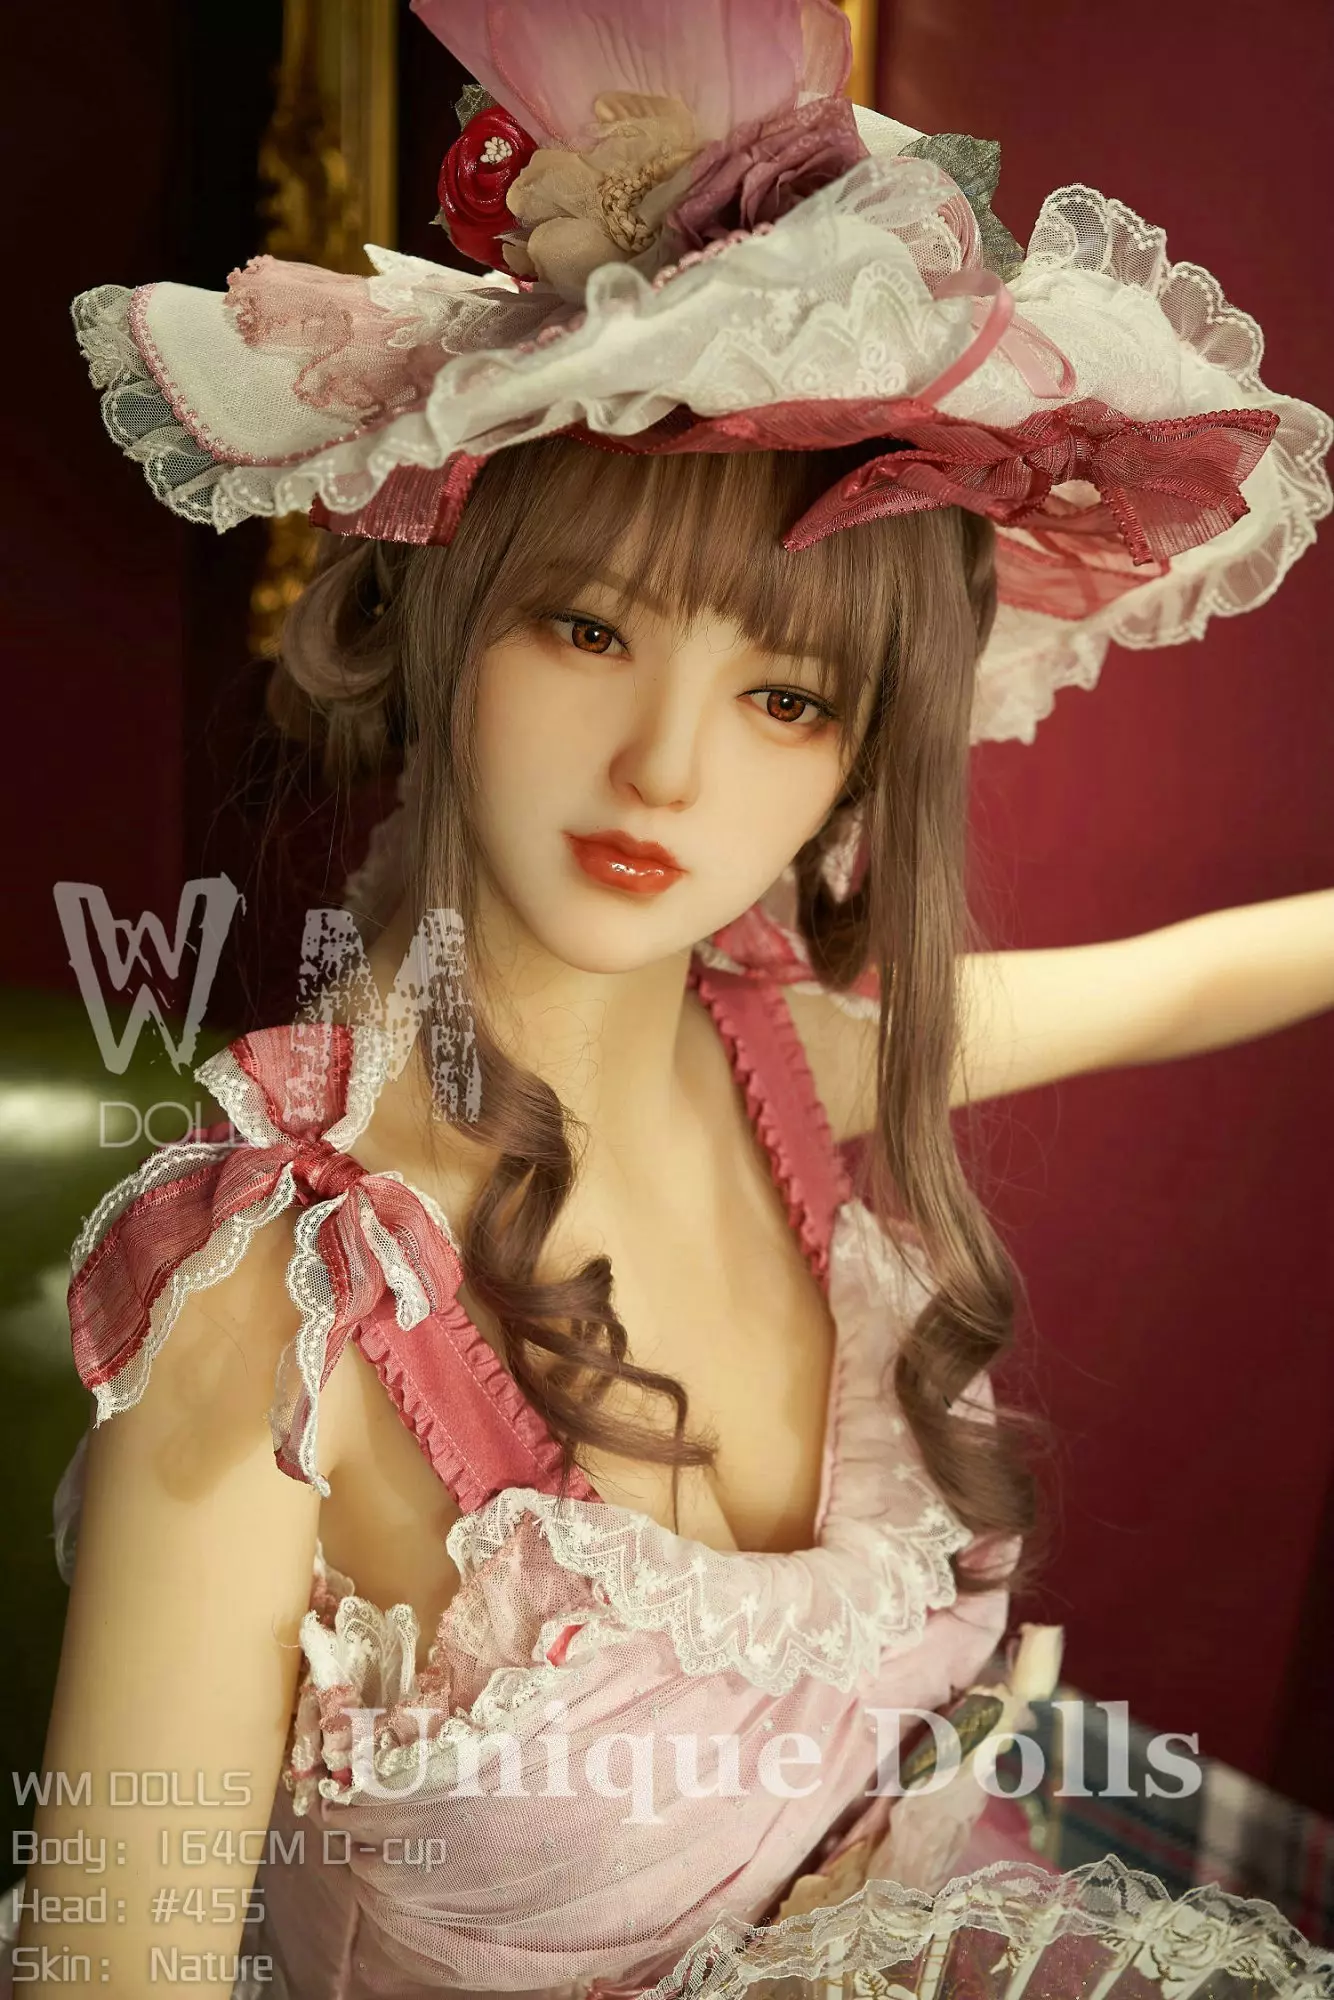 WM Doll 164cm D cup TPE sex doll Emma with #455